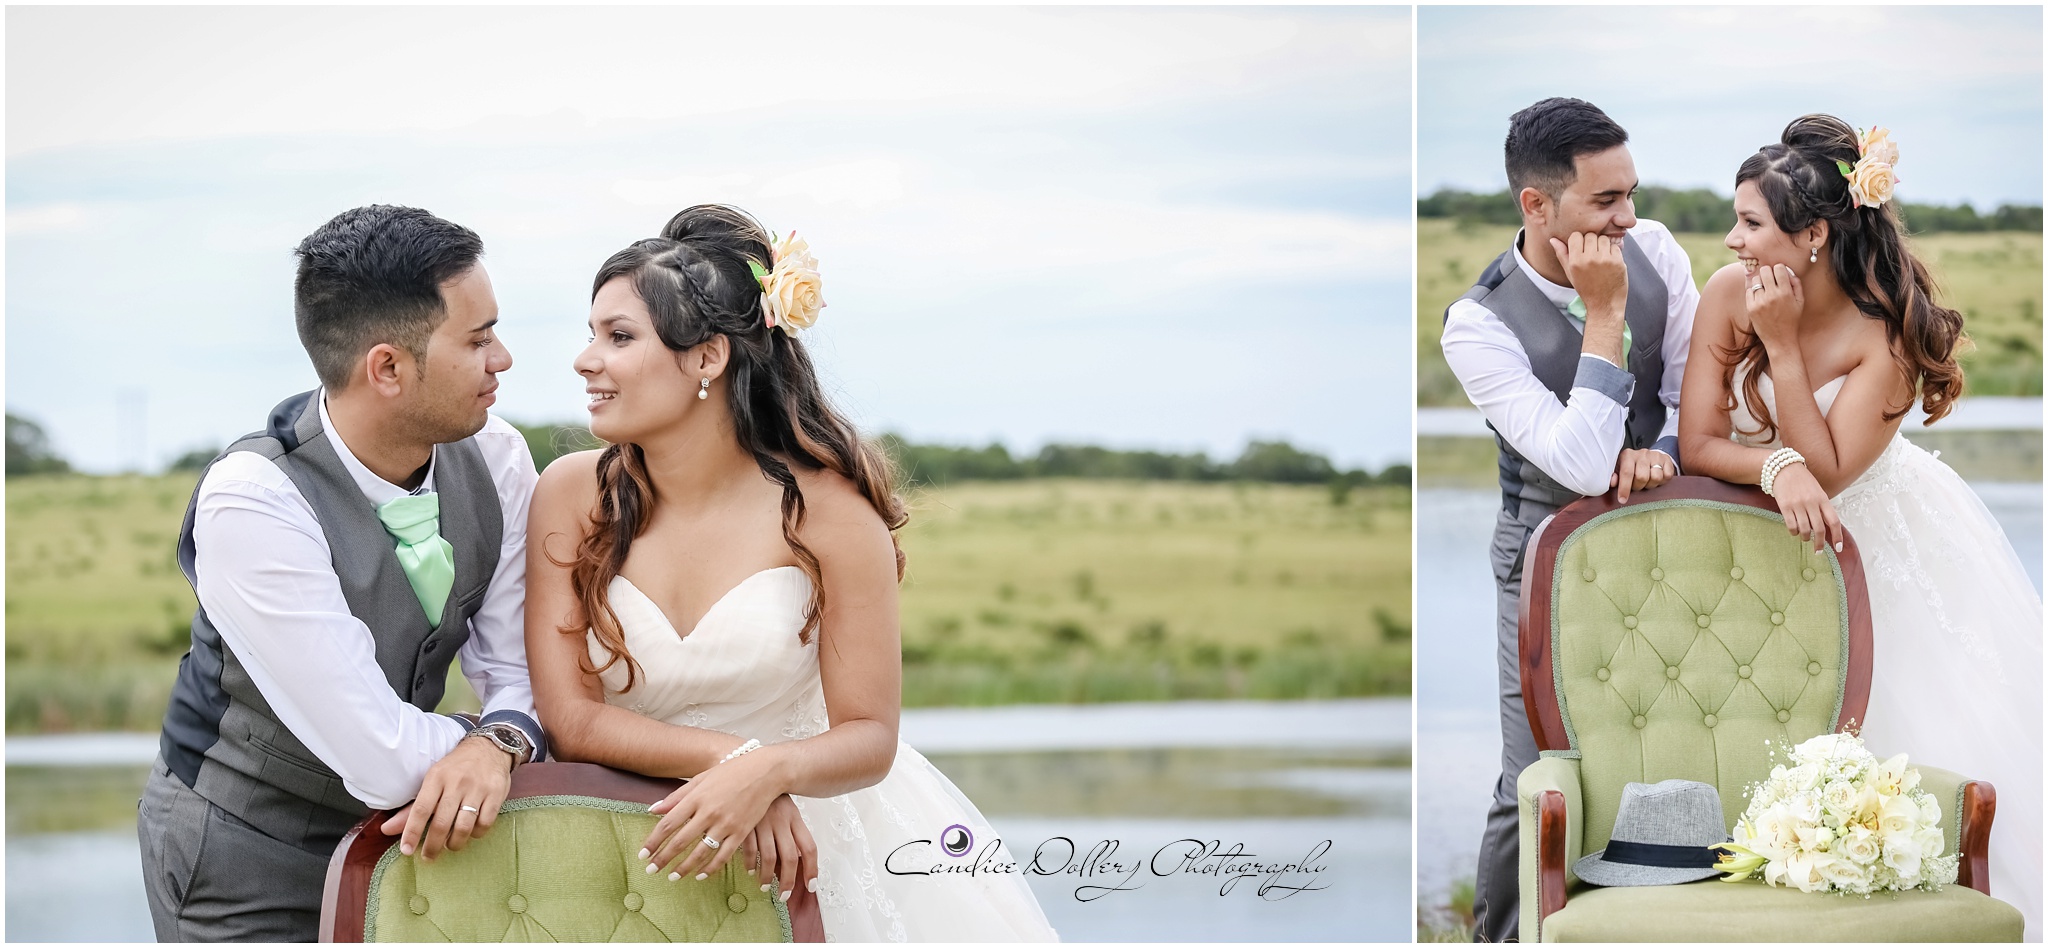 Paula & Jaycee's Wedding - Cypress Dale - Candice Dollery Photography_3107